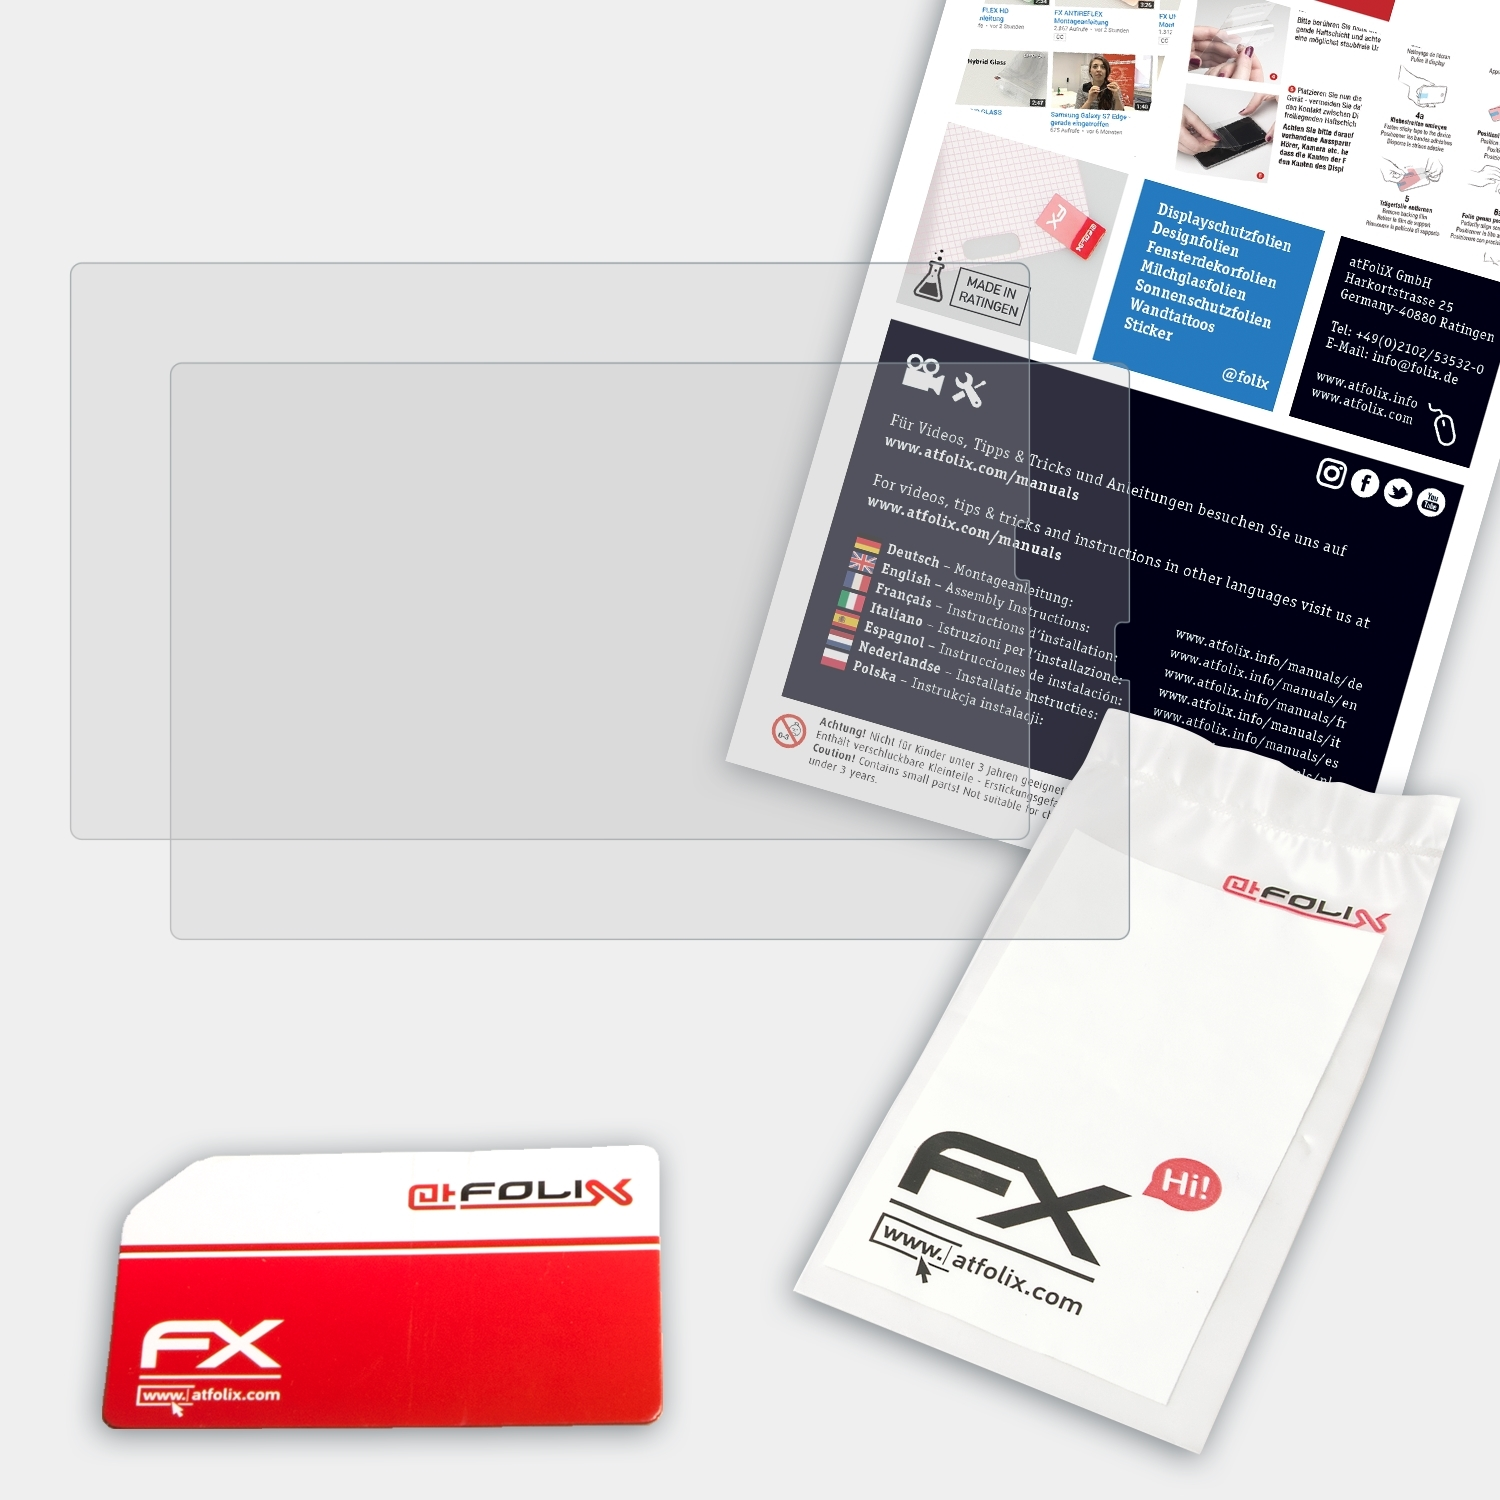 ATFOLIX 2x Wacom Pro 13) MobileStudio FX-Antireflex Displayschutz(für